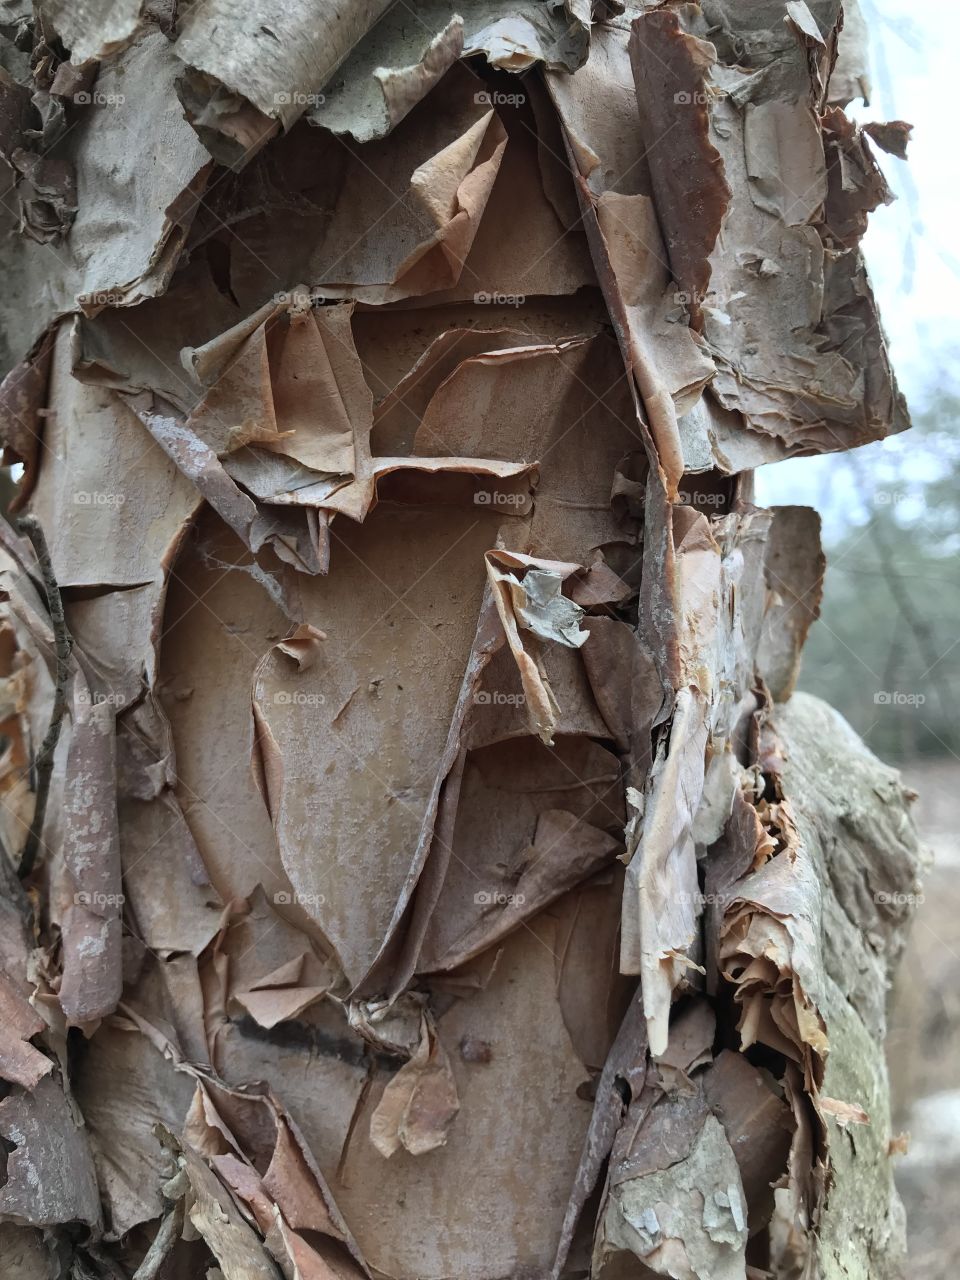 Birch tree full of layers!